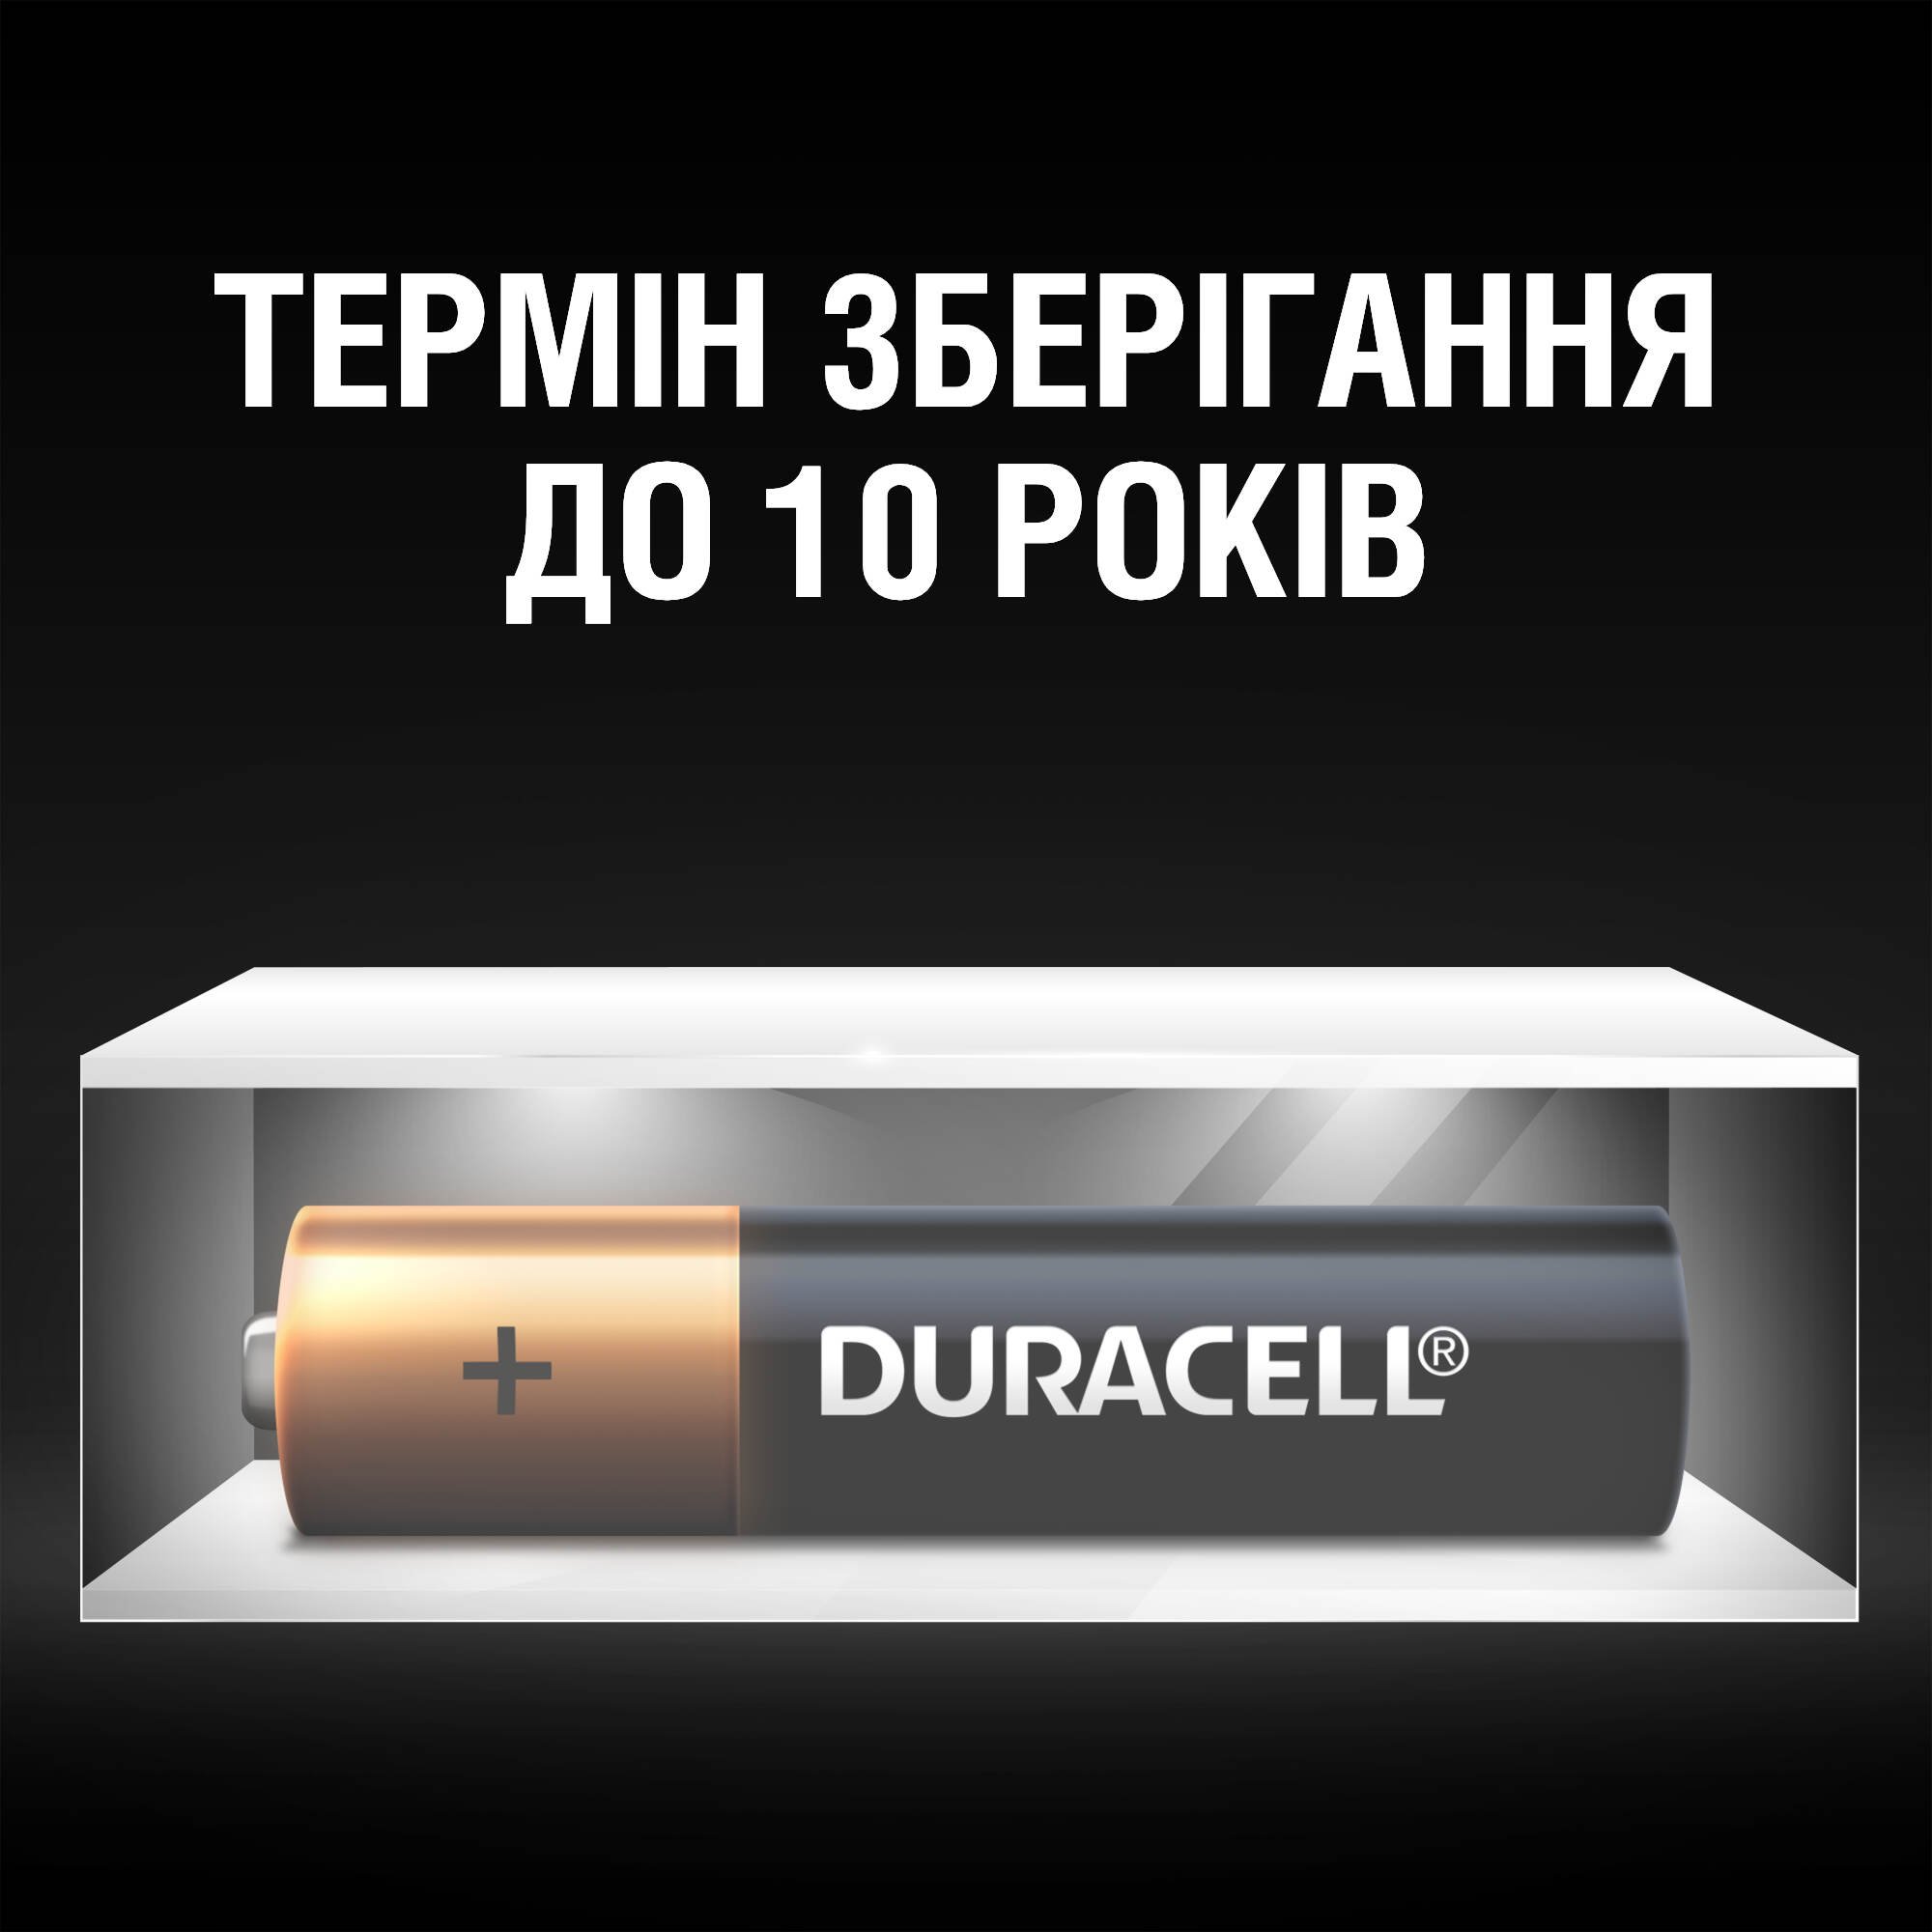 Щелочные батарейки мизинчиковые Duracell 1,5 V AAA LR03/MN2400, 2 шт. (706007) - фото 6